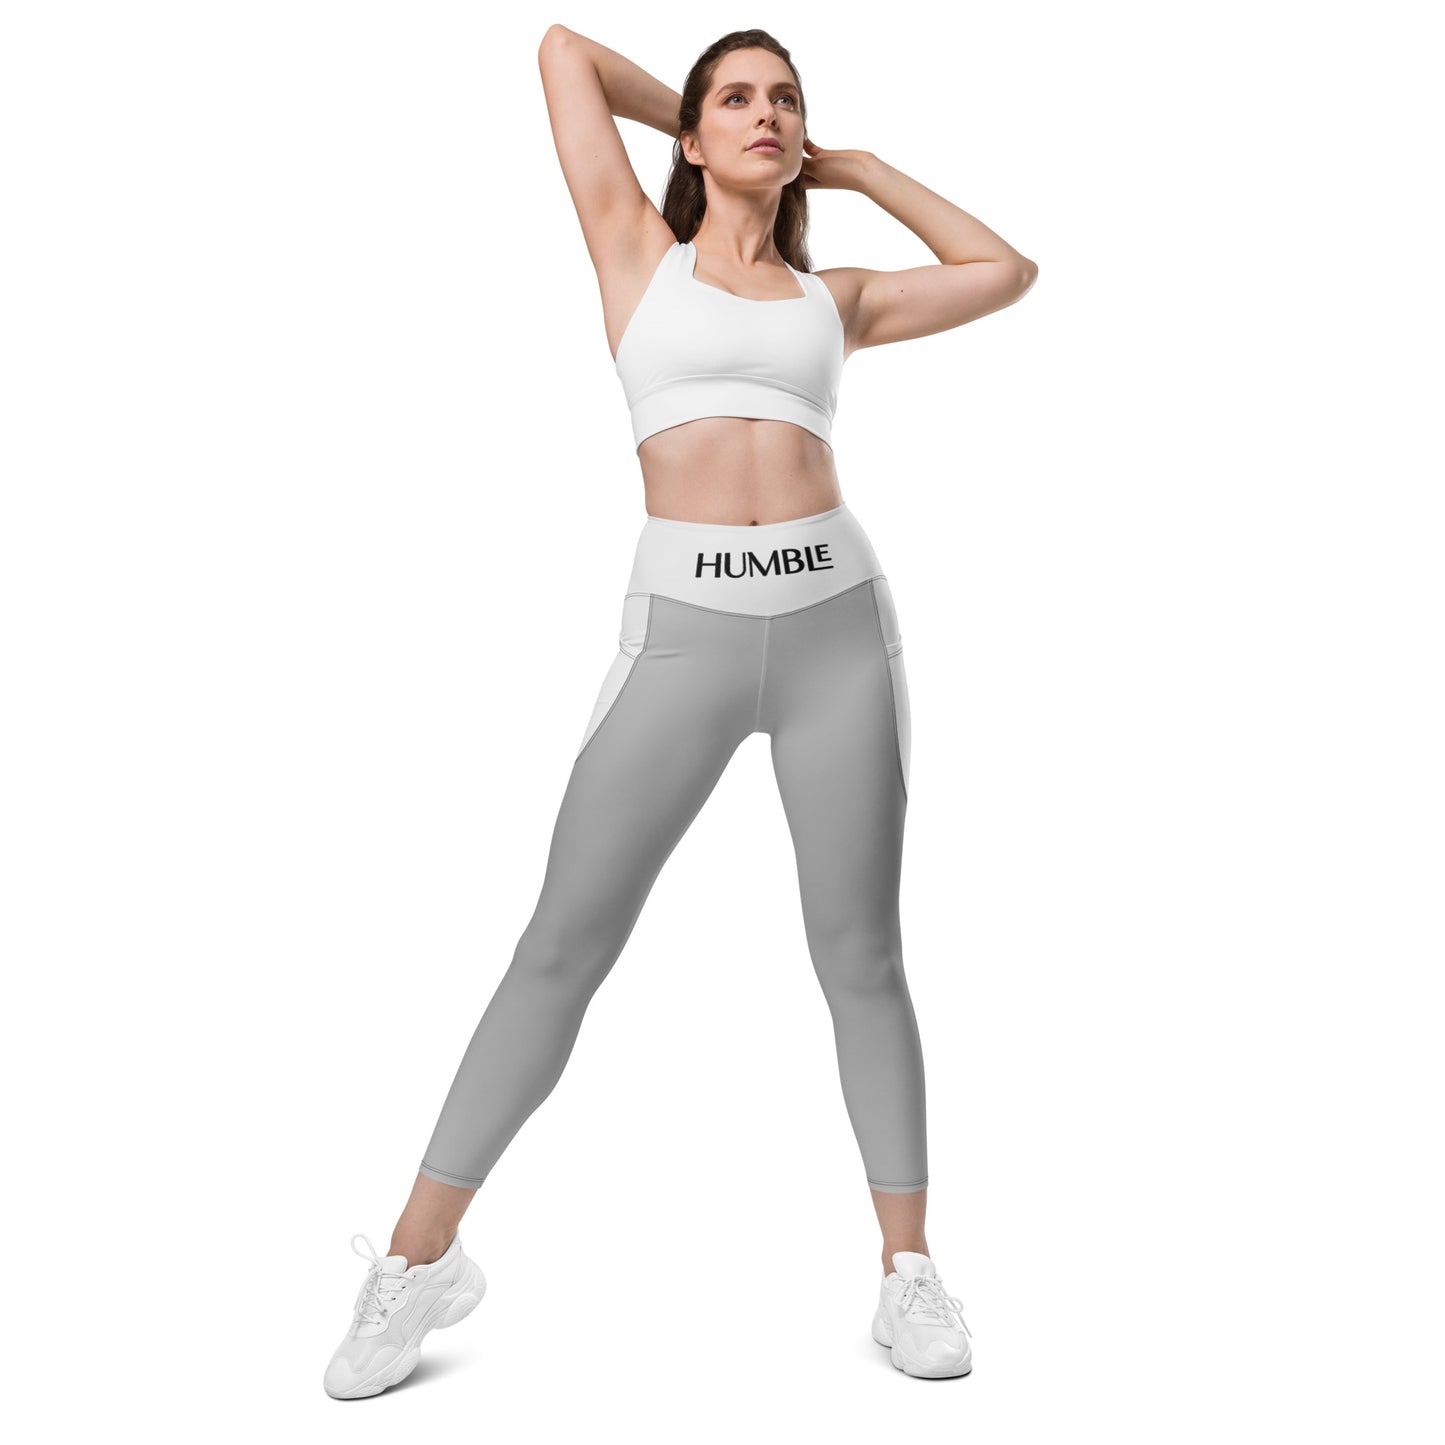 Humble Sportswear™ Women's Frost Grey Active Compression Leggings - Mireille Fine Art